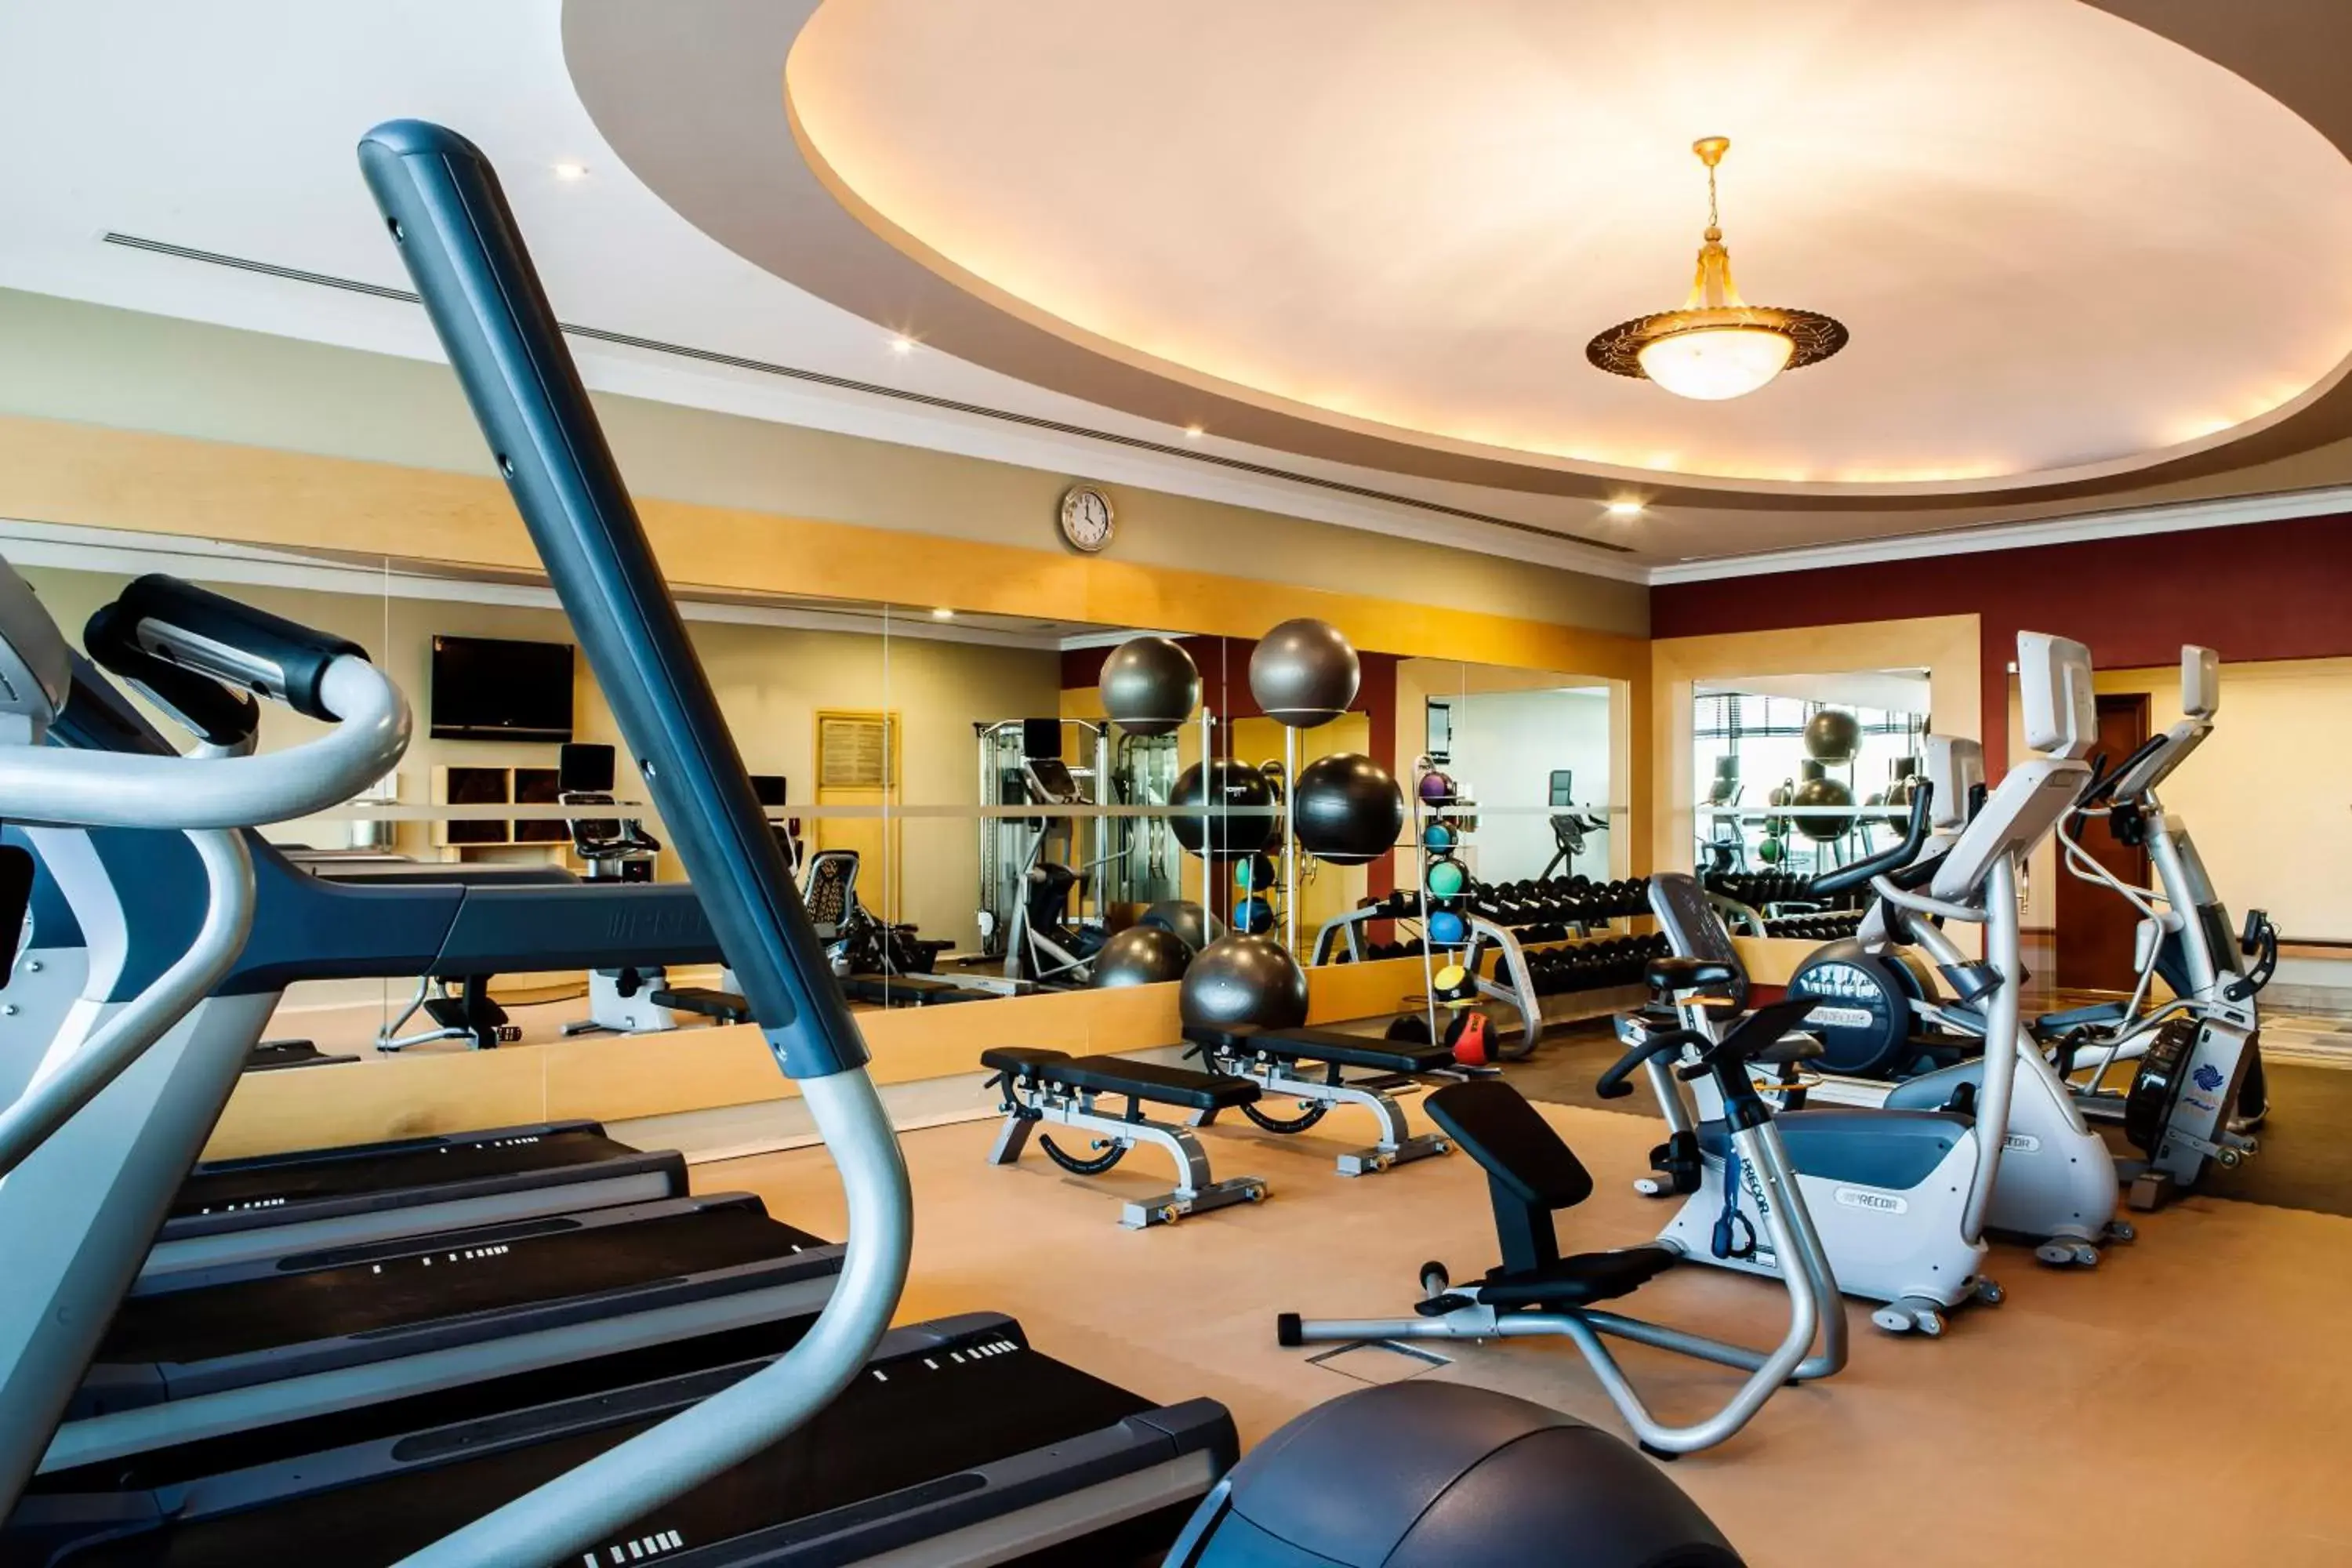 Fitness centre/facilities, Fitness Center/Facilities in Corniche Hotel Sharjah